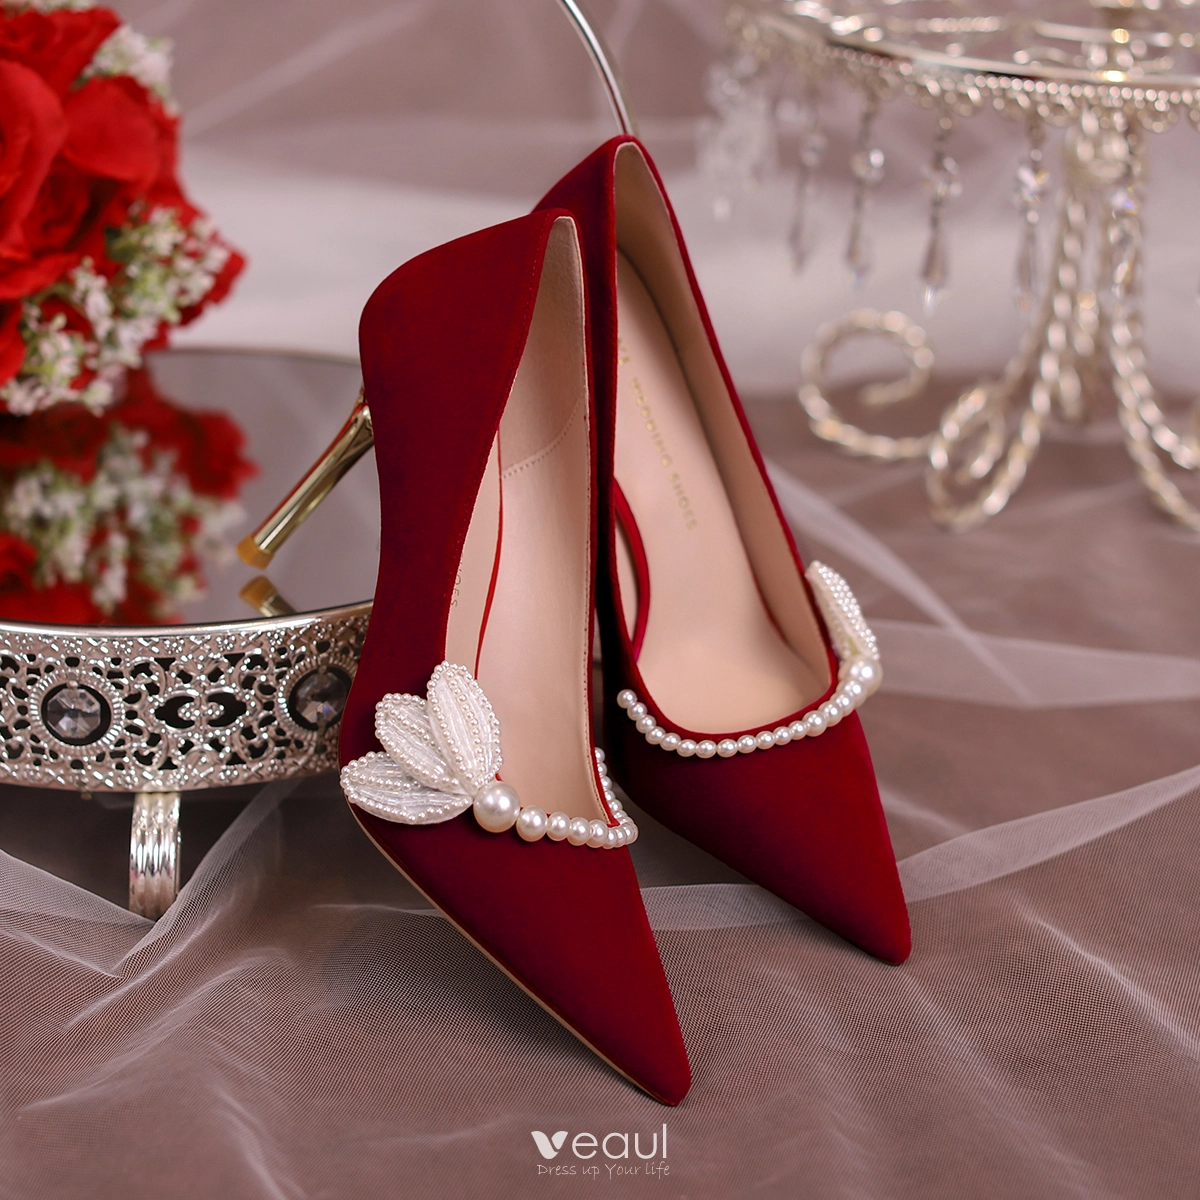 Wedding shoes - Heels | Facebook Marketplace | Facebook